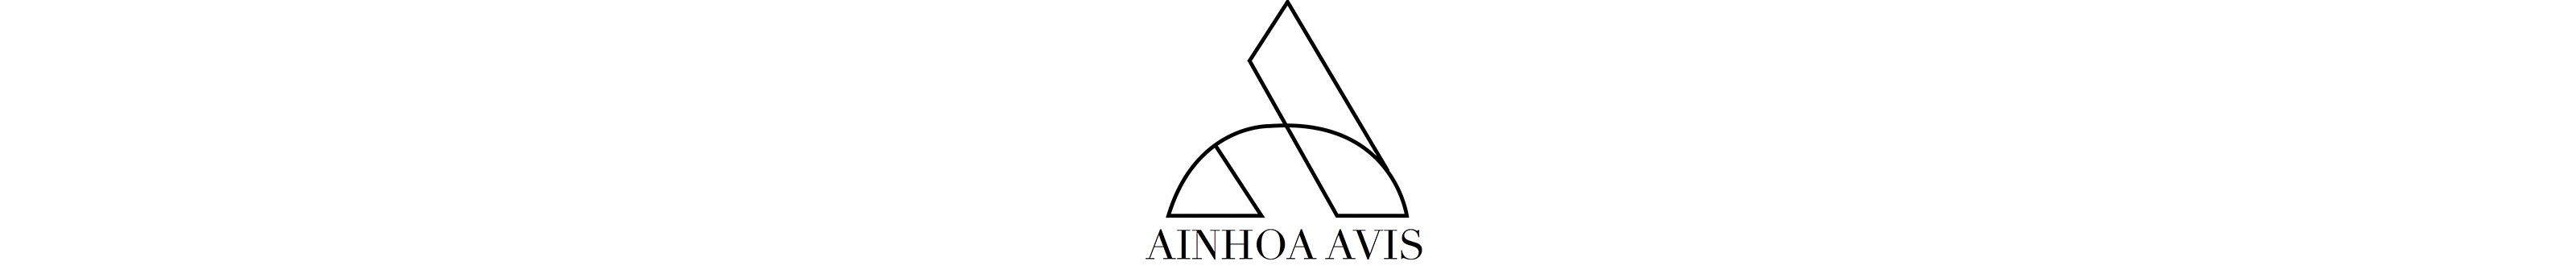 Ainhoa Avis's profile banner